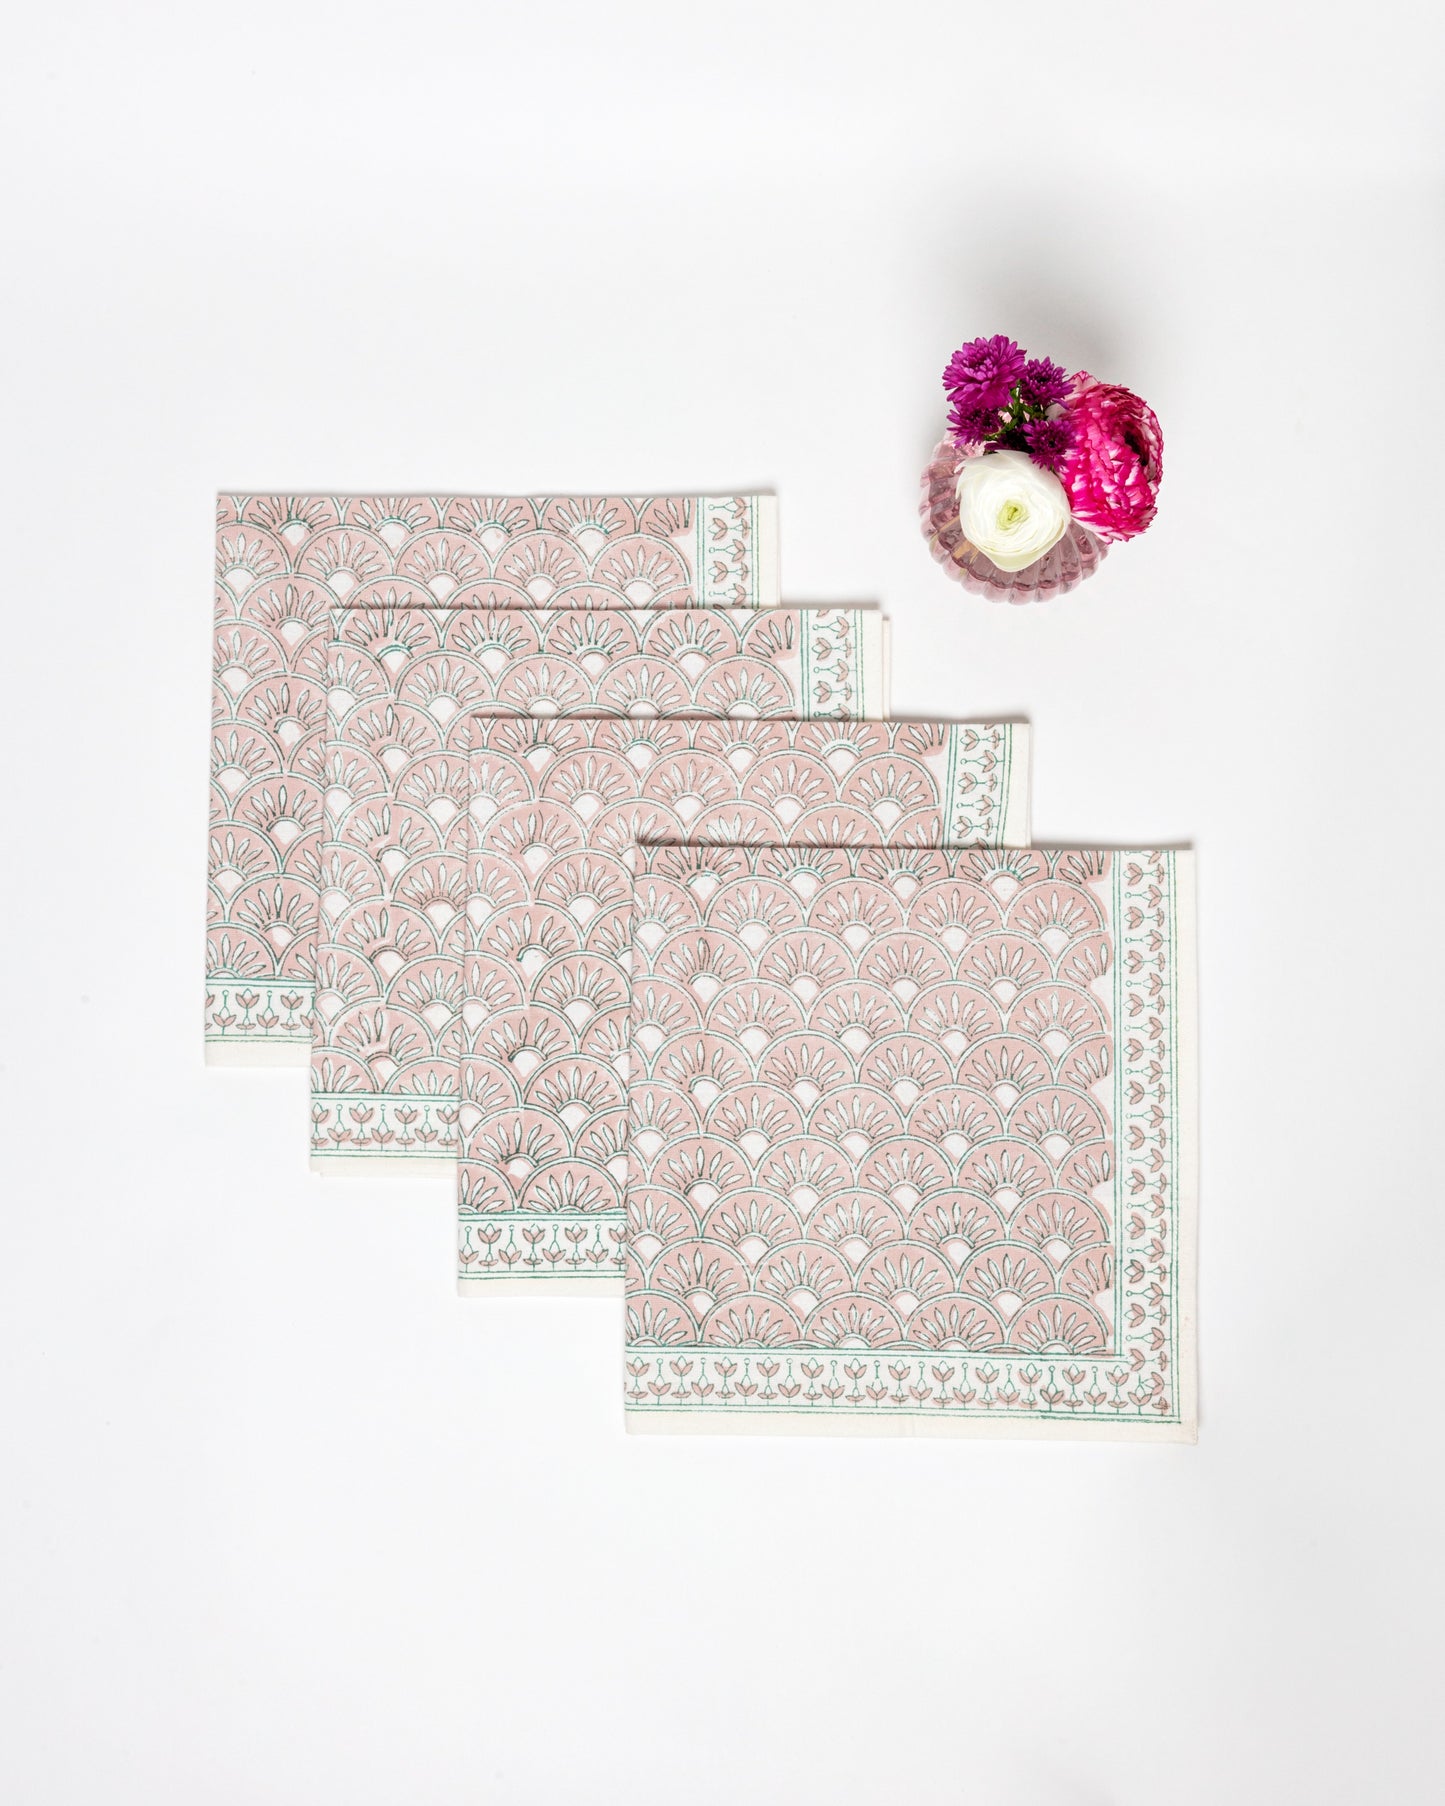 Set of 4 Block Printed Cotton Napkins in Geometric Blush & Turquoise